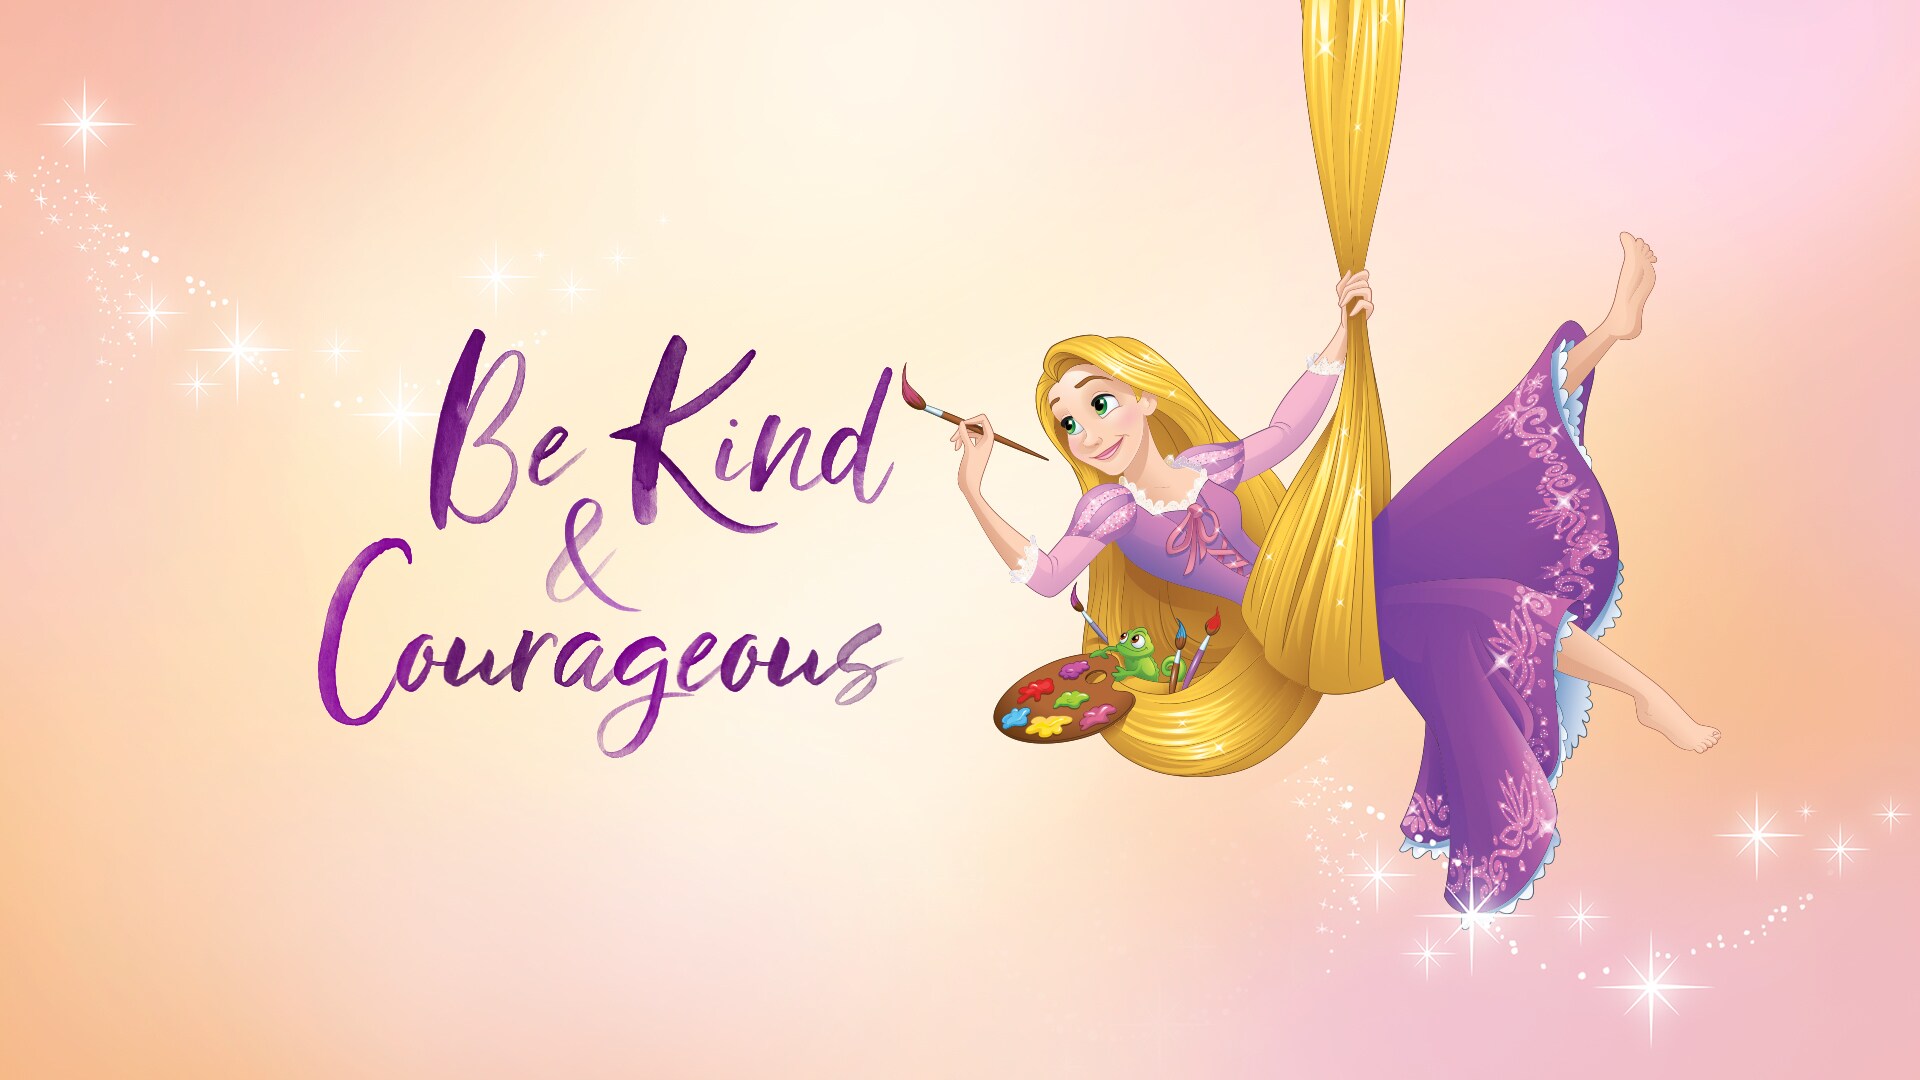 Rapunzel - "Be Kind & Courageous" - Downloadable Desktop Wallpaper